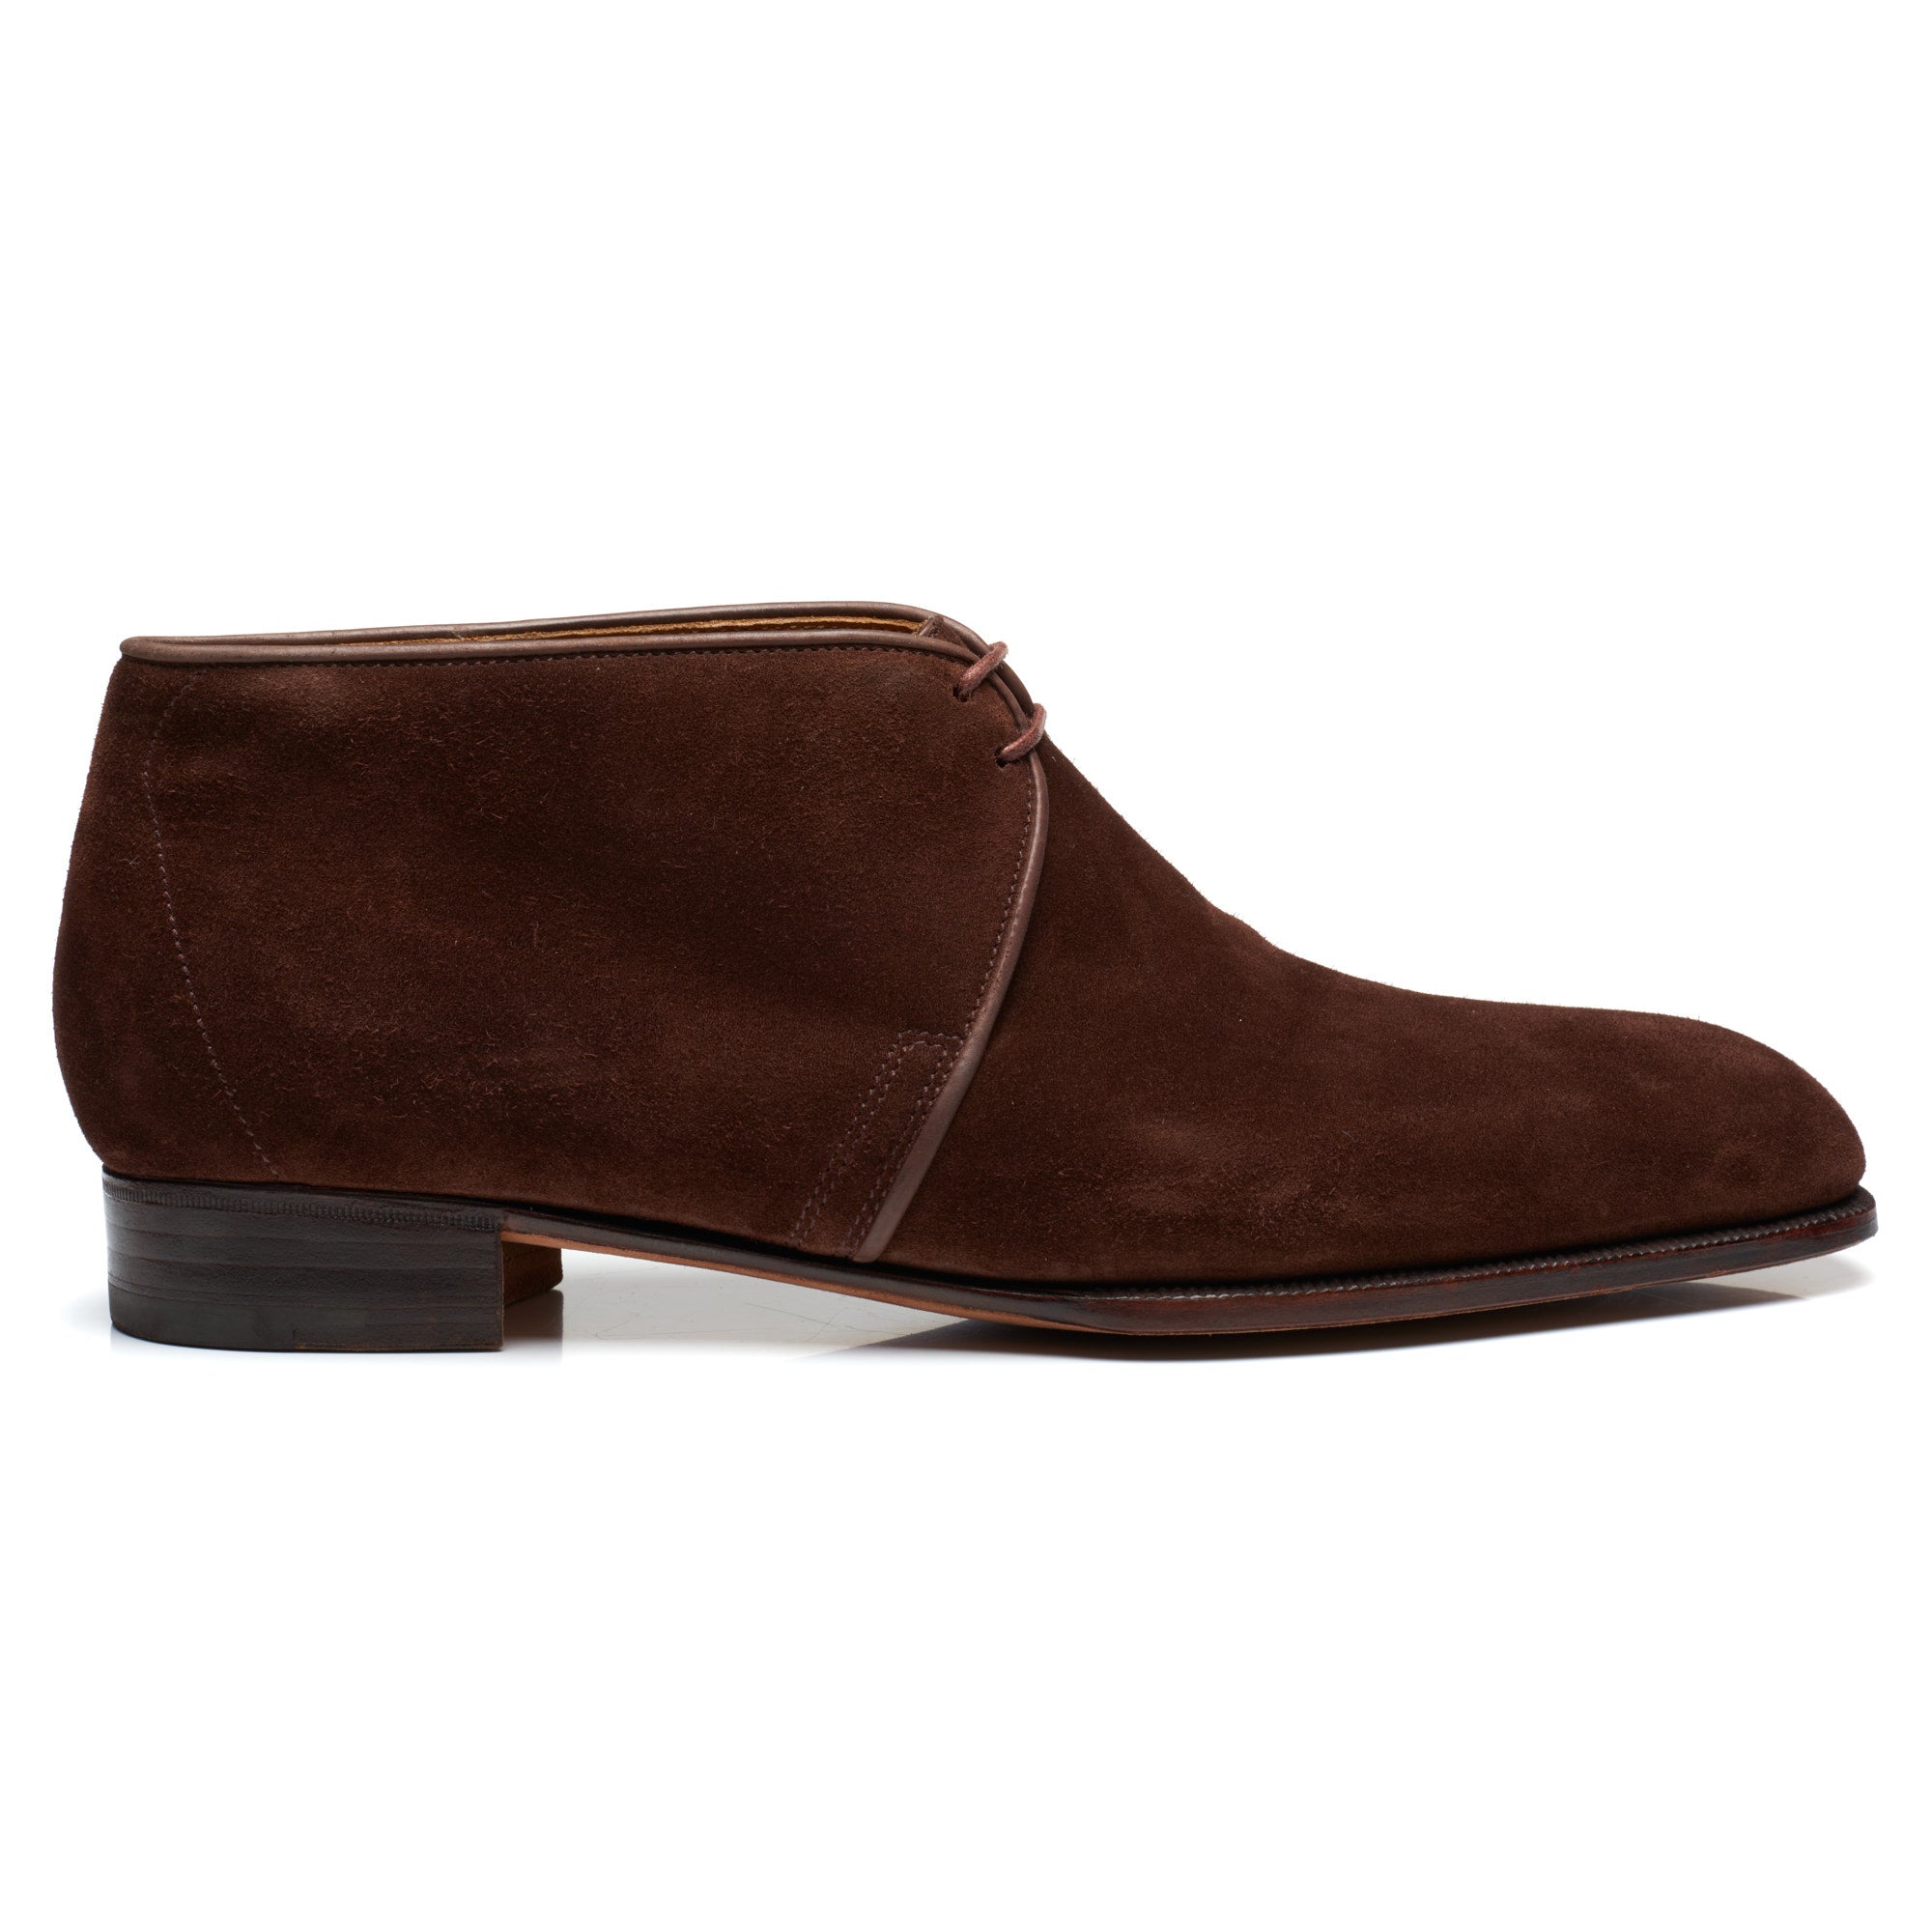 JOHN LOBB Paris Bespoke Brown Suede Leather Chukka Boots Shoes UK 7.5 US 8.5 JOHN LOBB